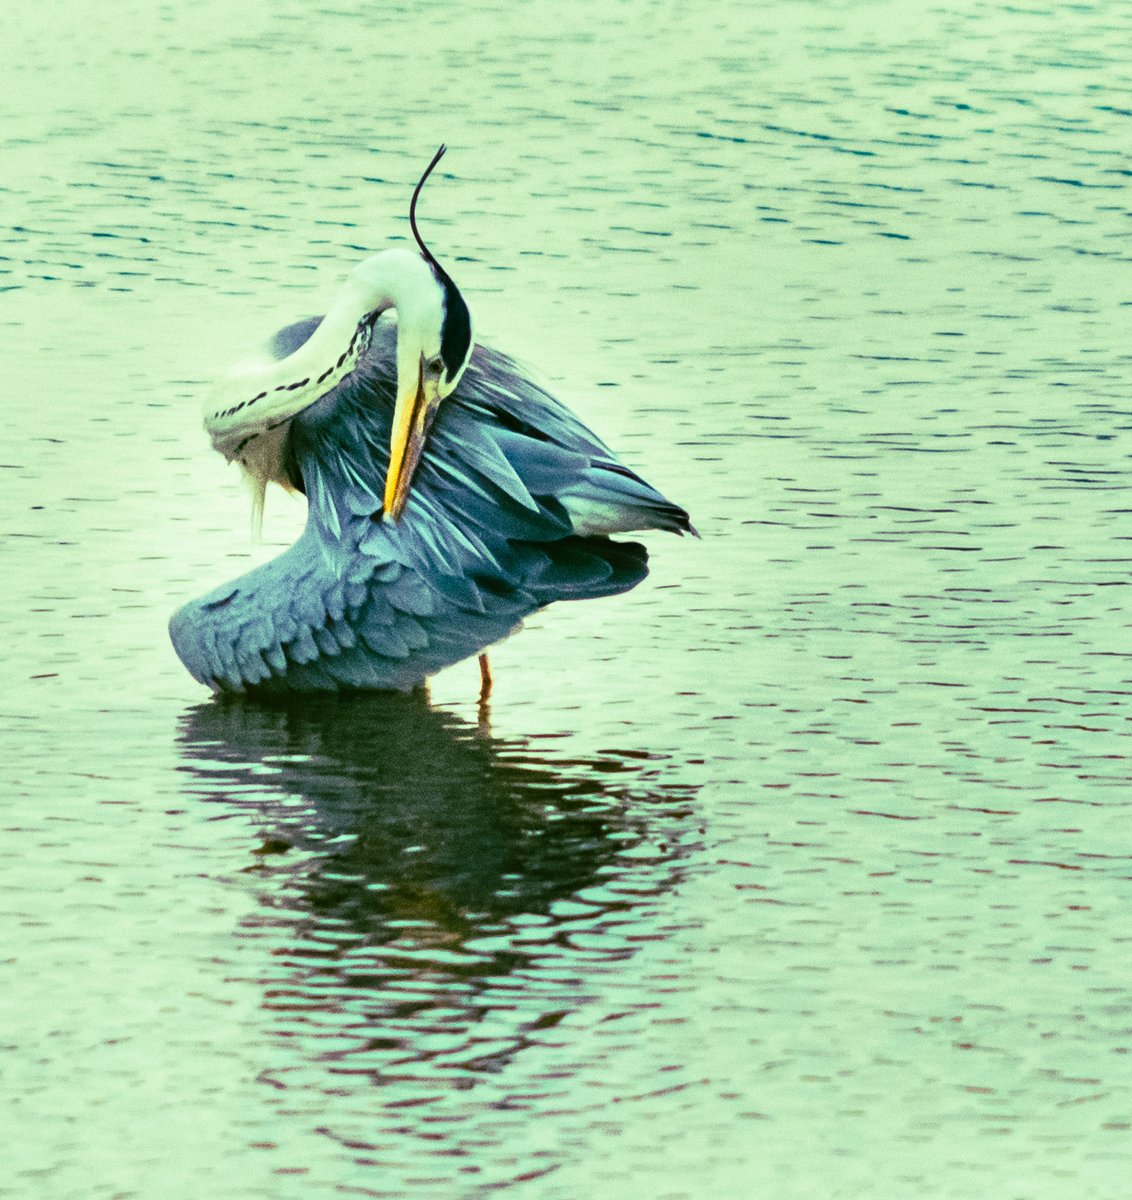 #greyheron #birds #nature #heron #bird #wildlife #birdphotography #birdsofinstagram #naturephotography